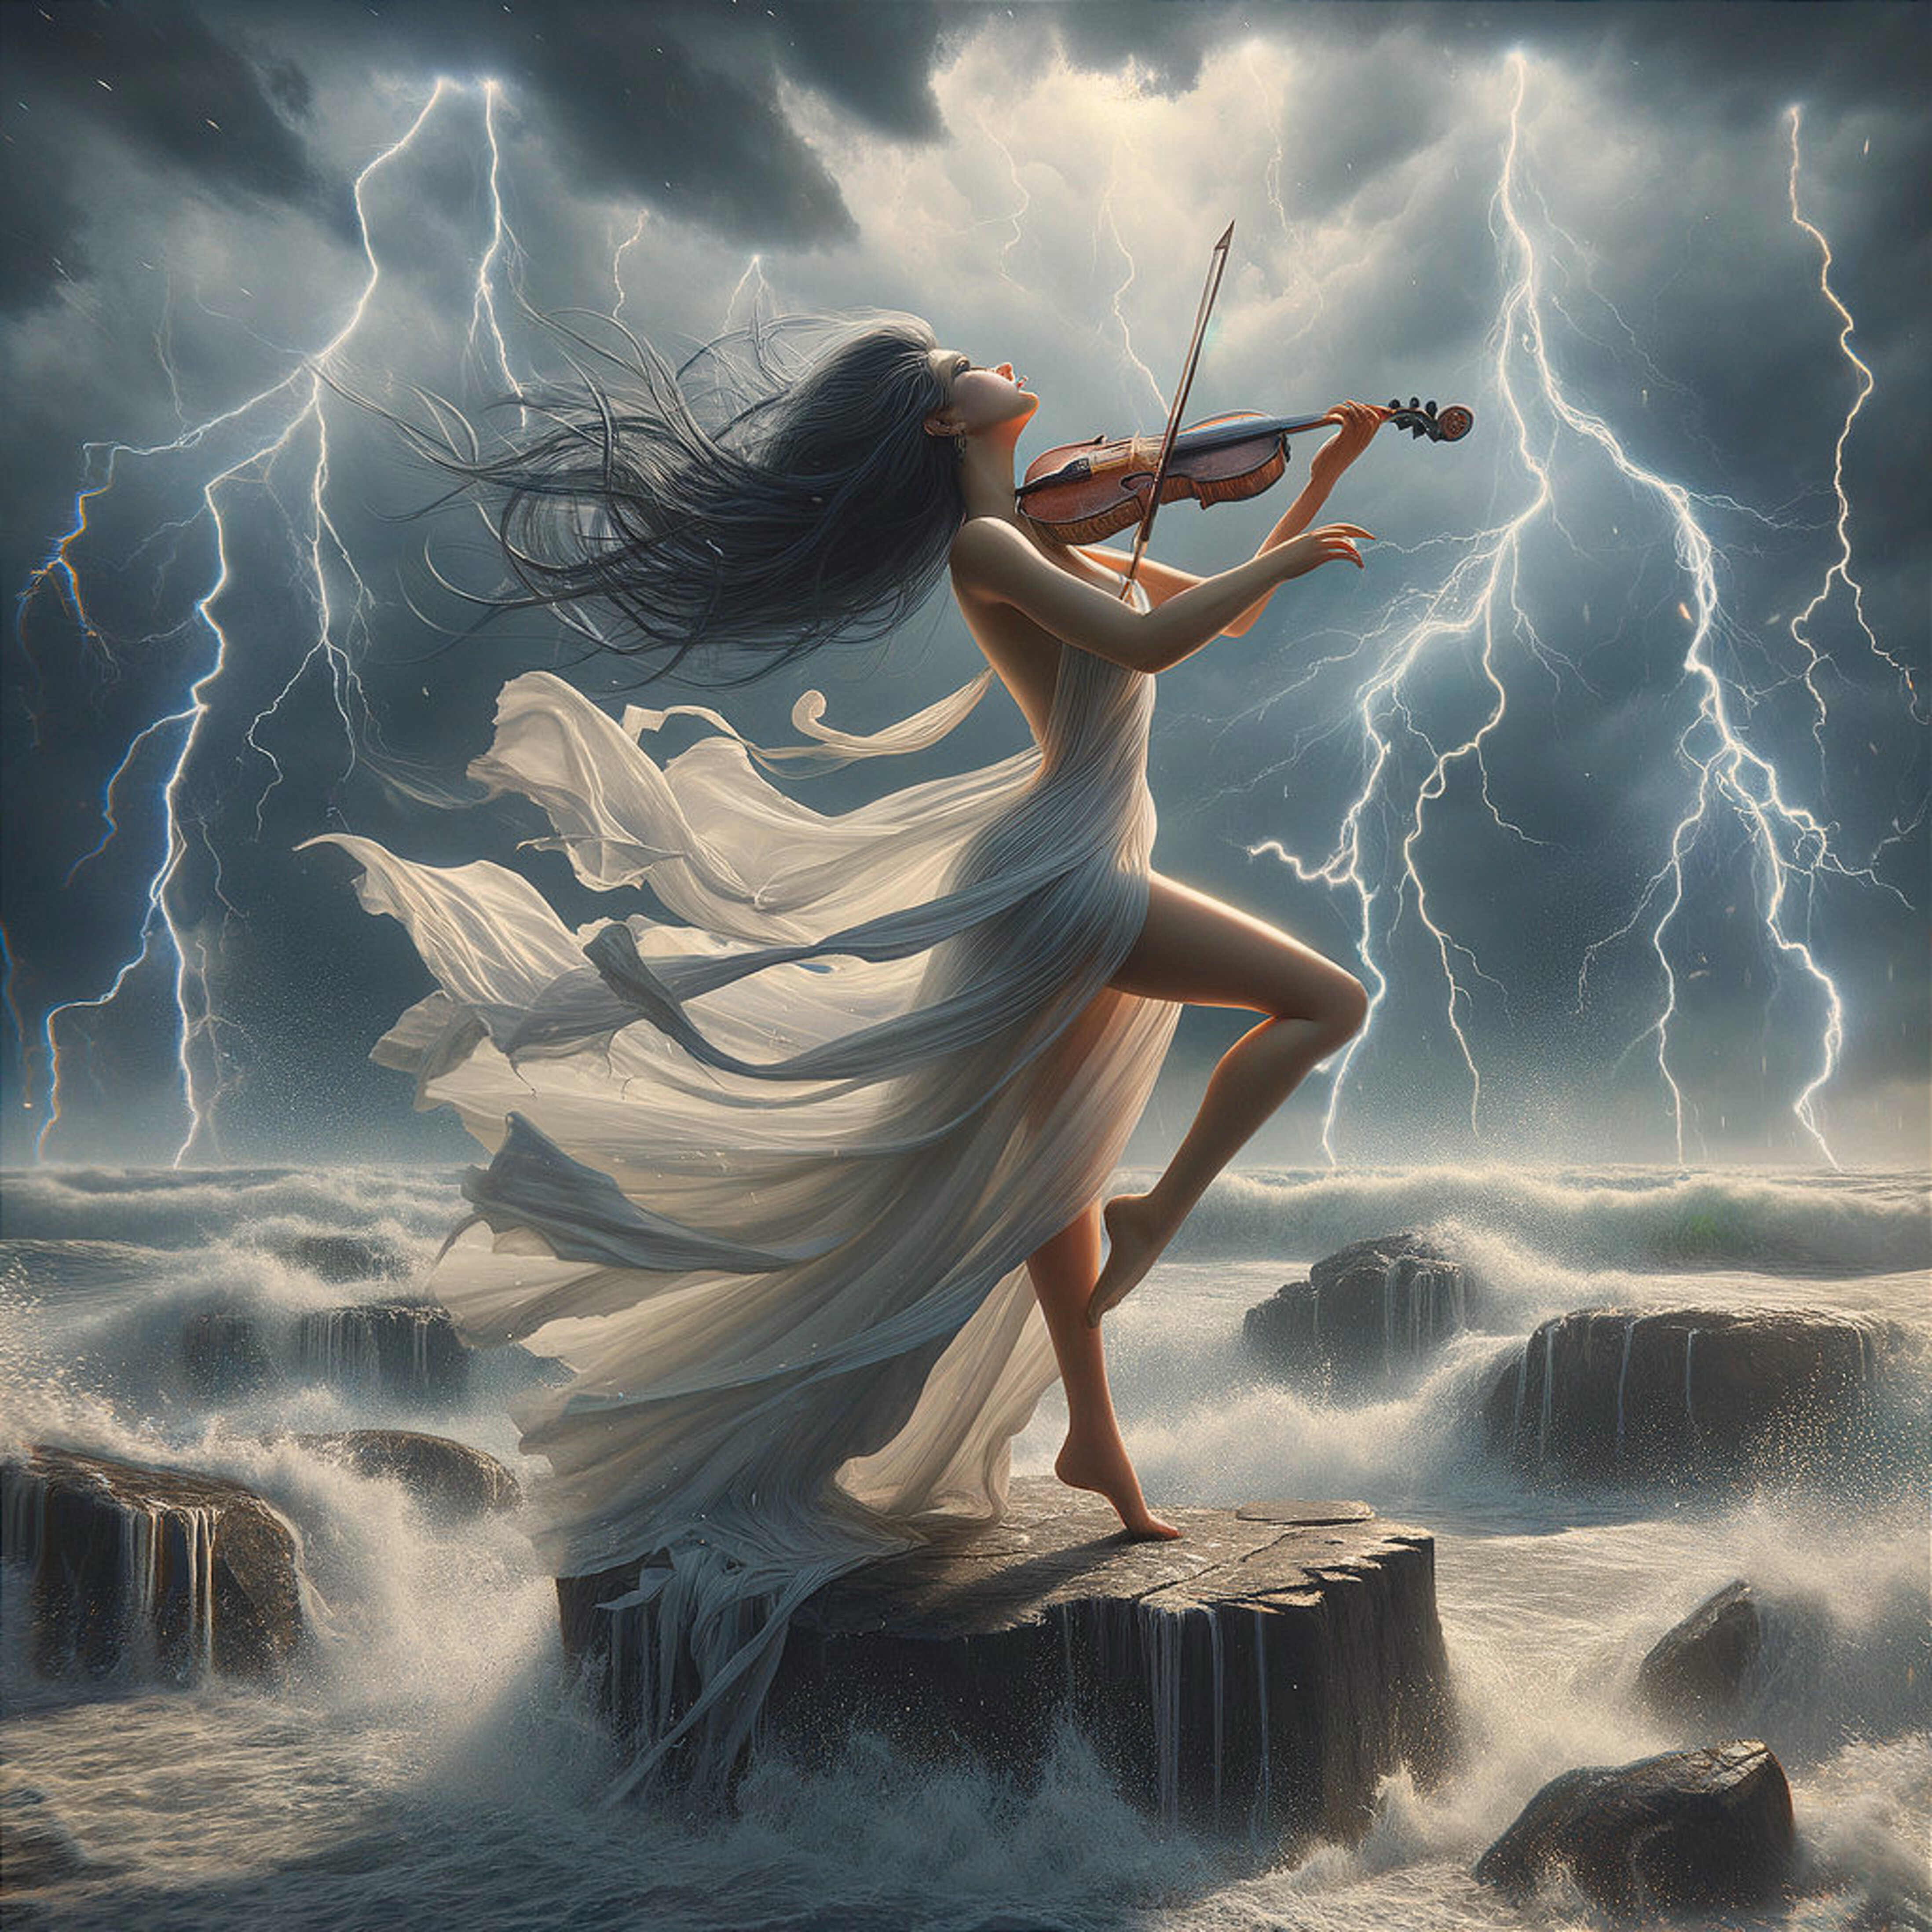 Бесплатное фото Девушка играет на скрипке